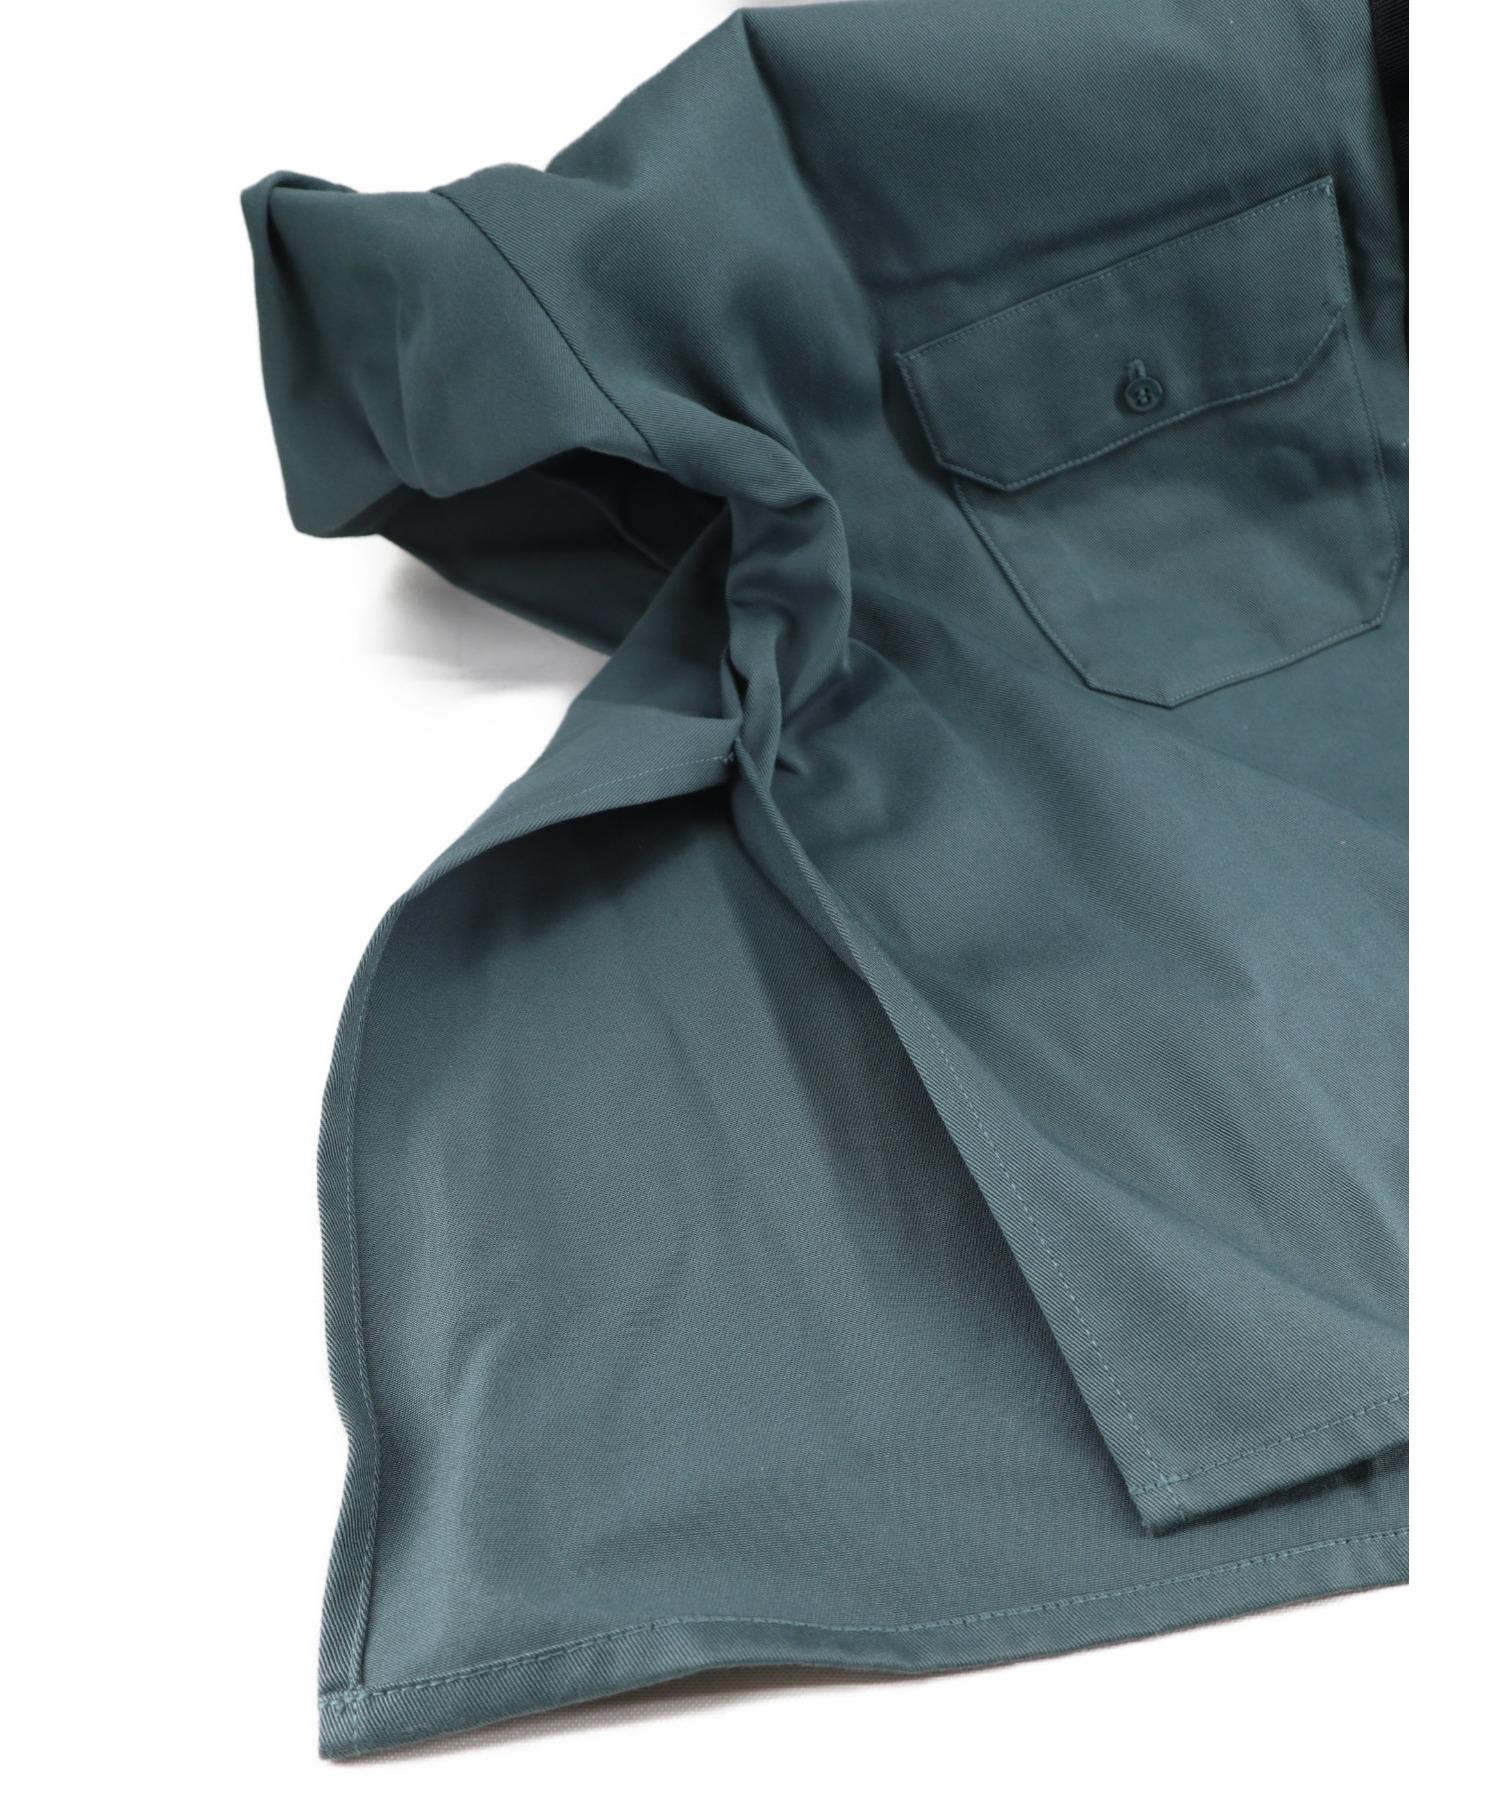 SHINYA KOZUKA×Dickies (シンヤコヅカ×ディッキーズ) work shirt-ish jacket グリーン サイズ:M 20SS